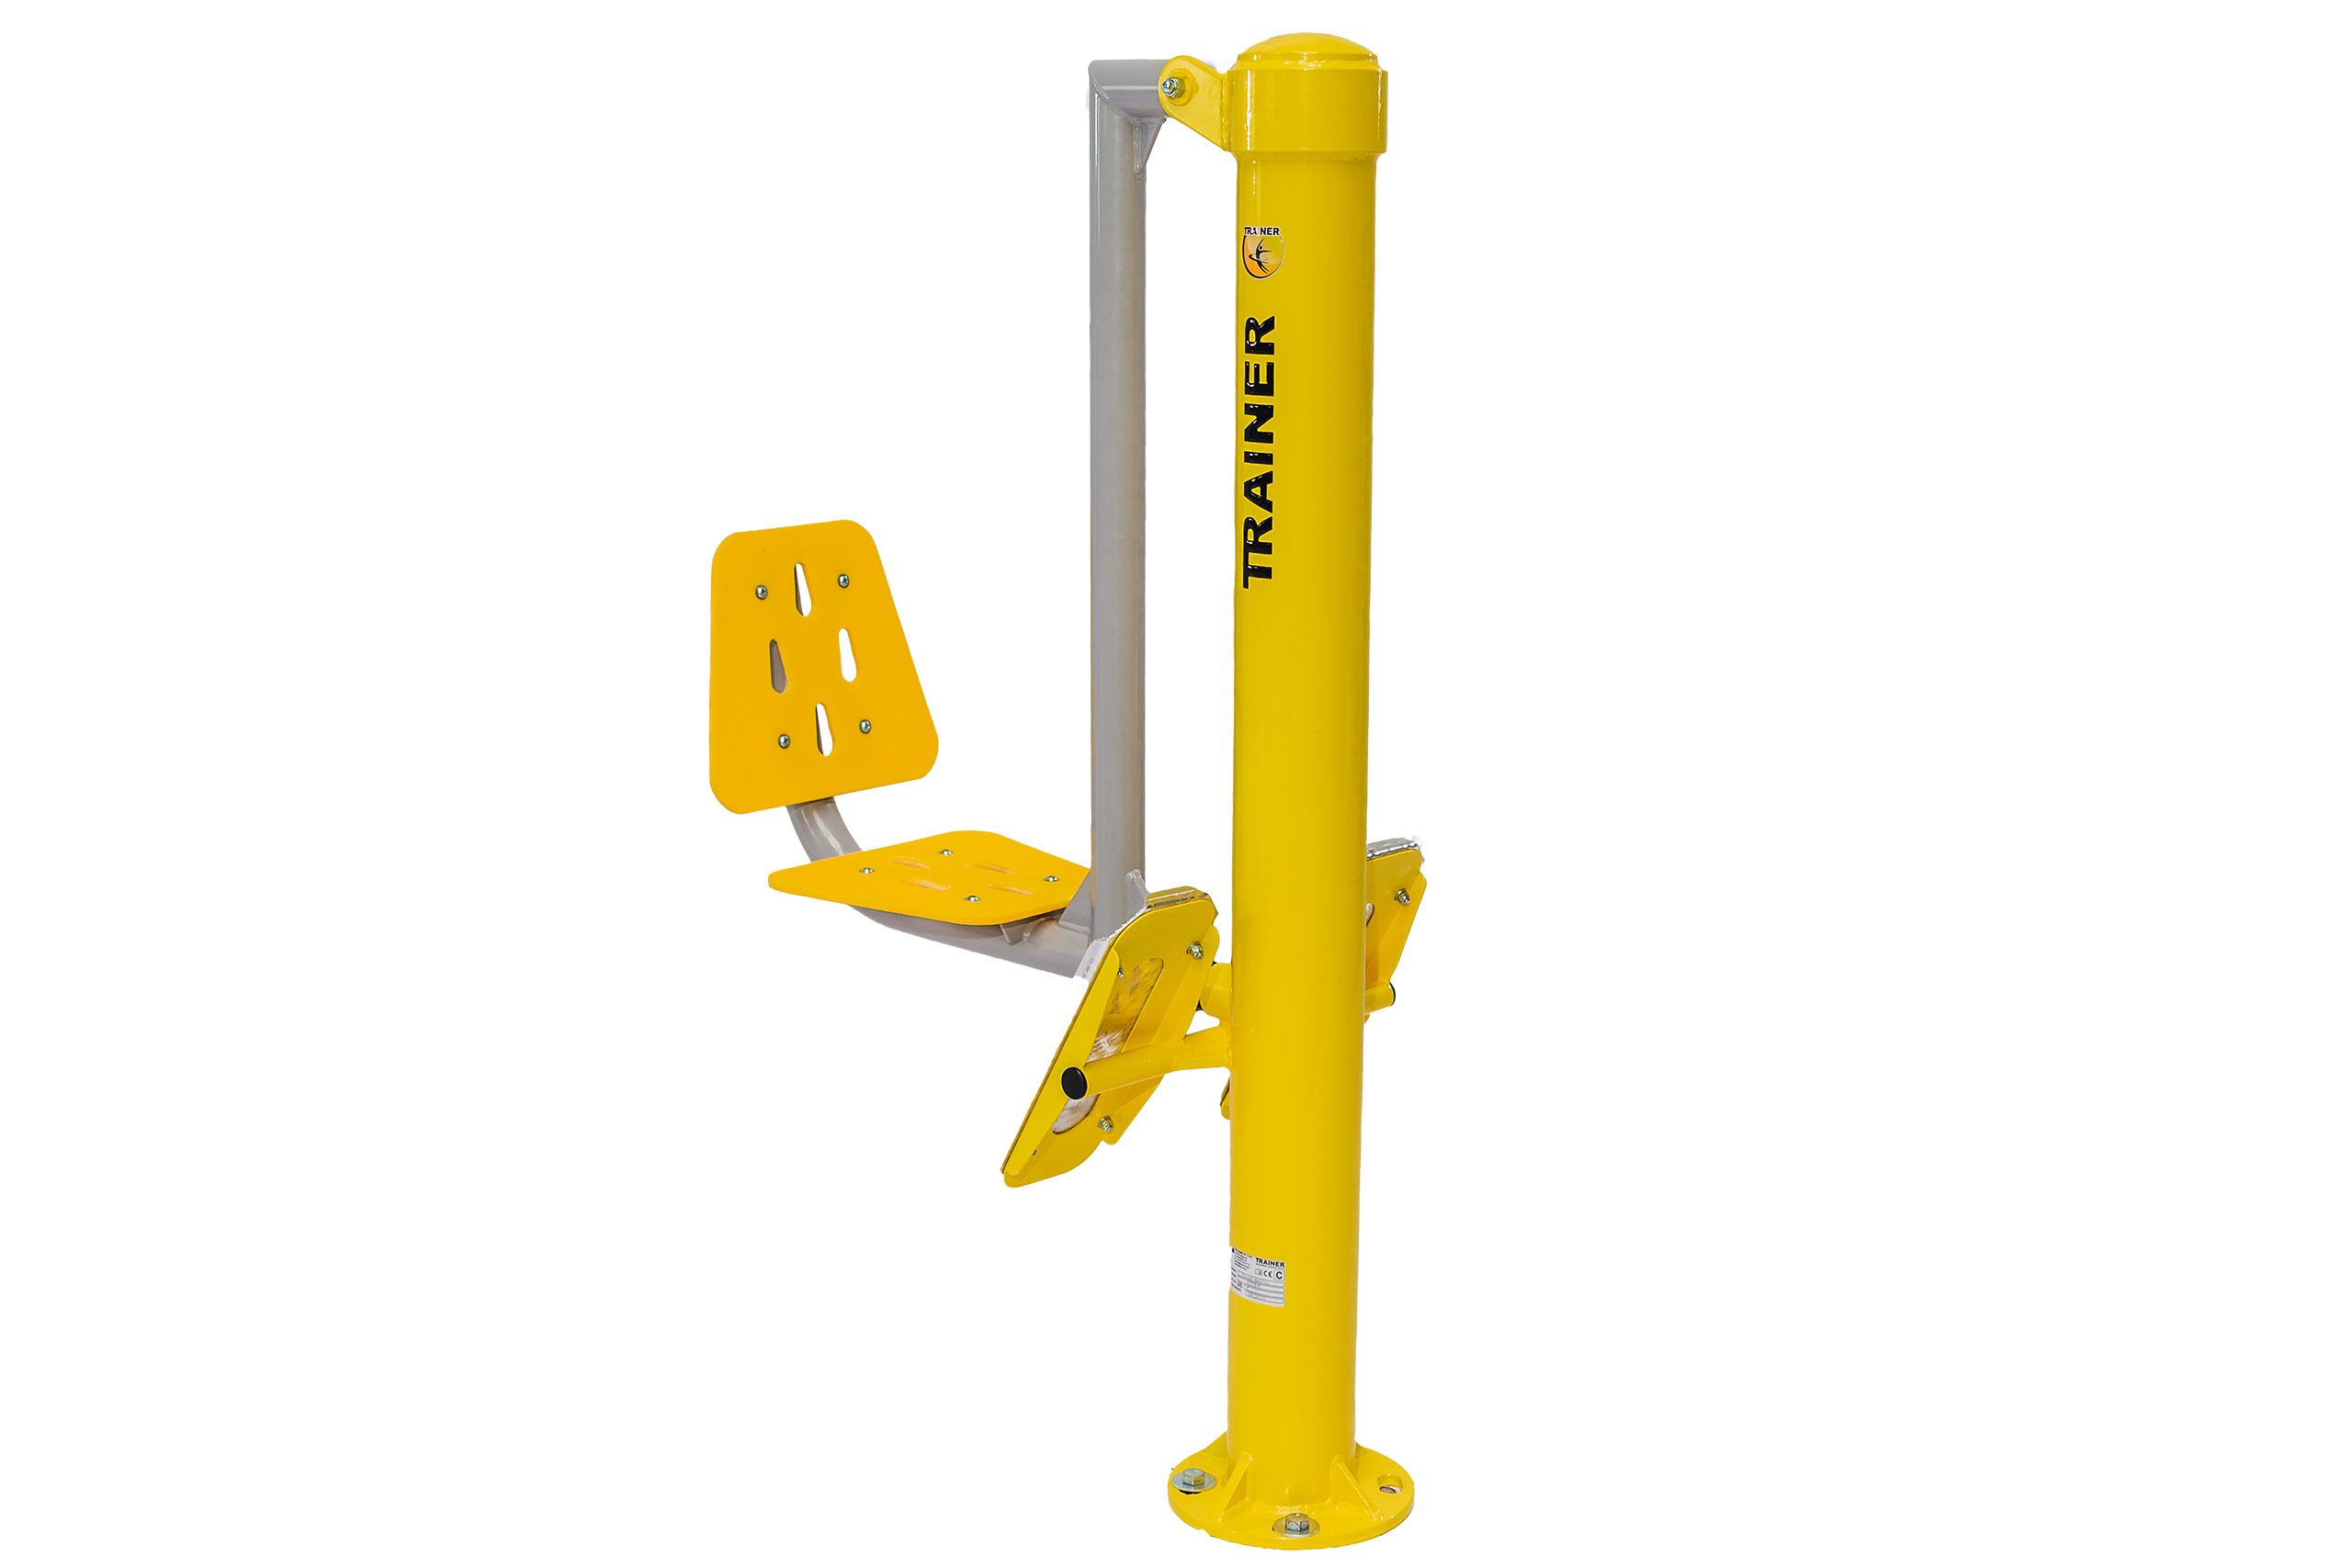 eg Stretcher - Outdoor Gyms Equipment